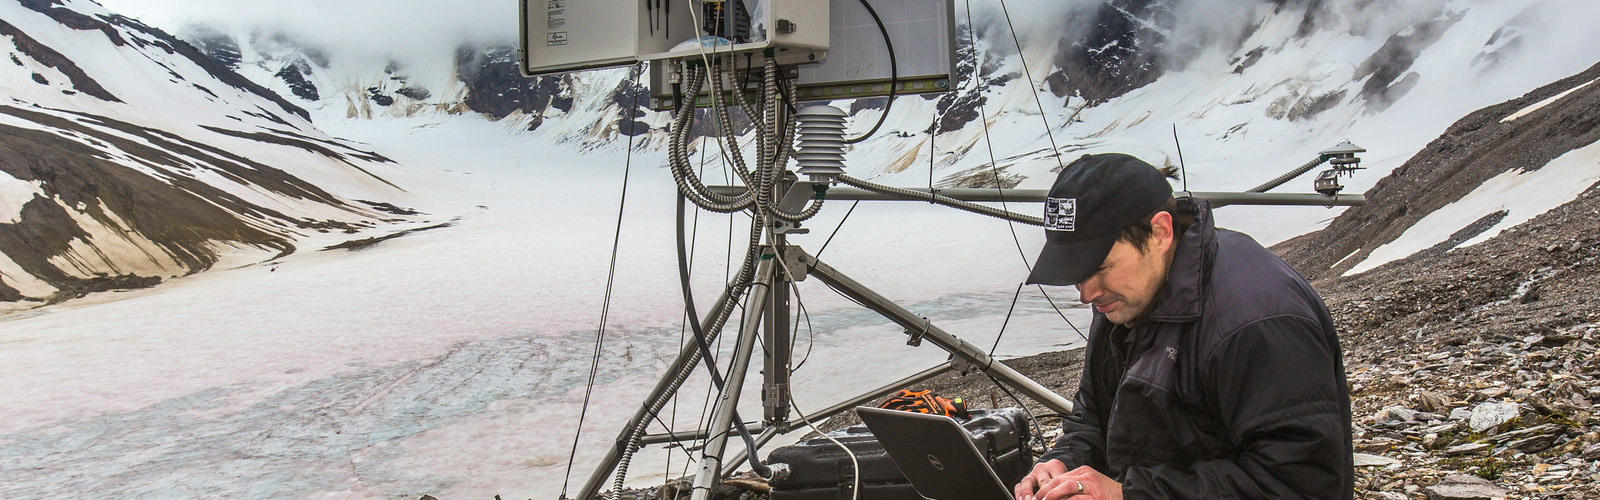 Research technician set up remote station atop glacier